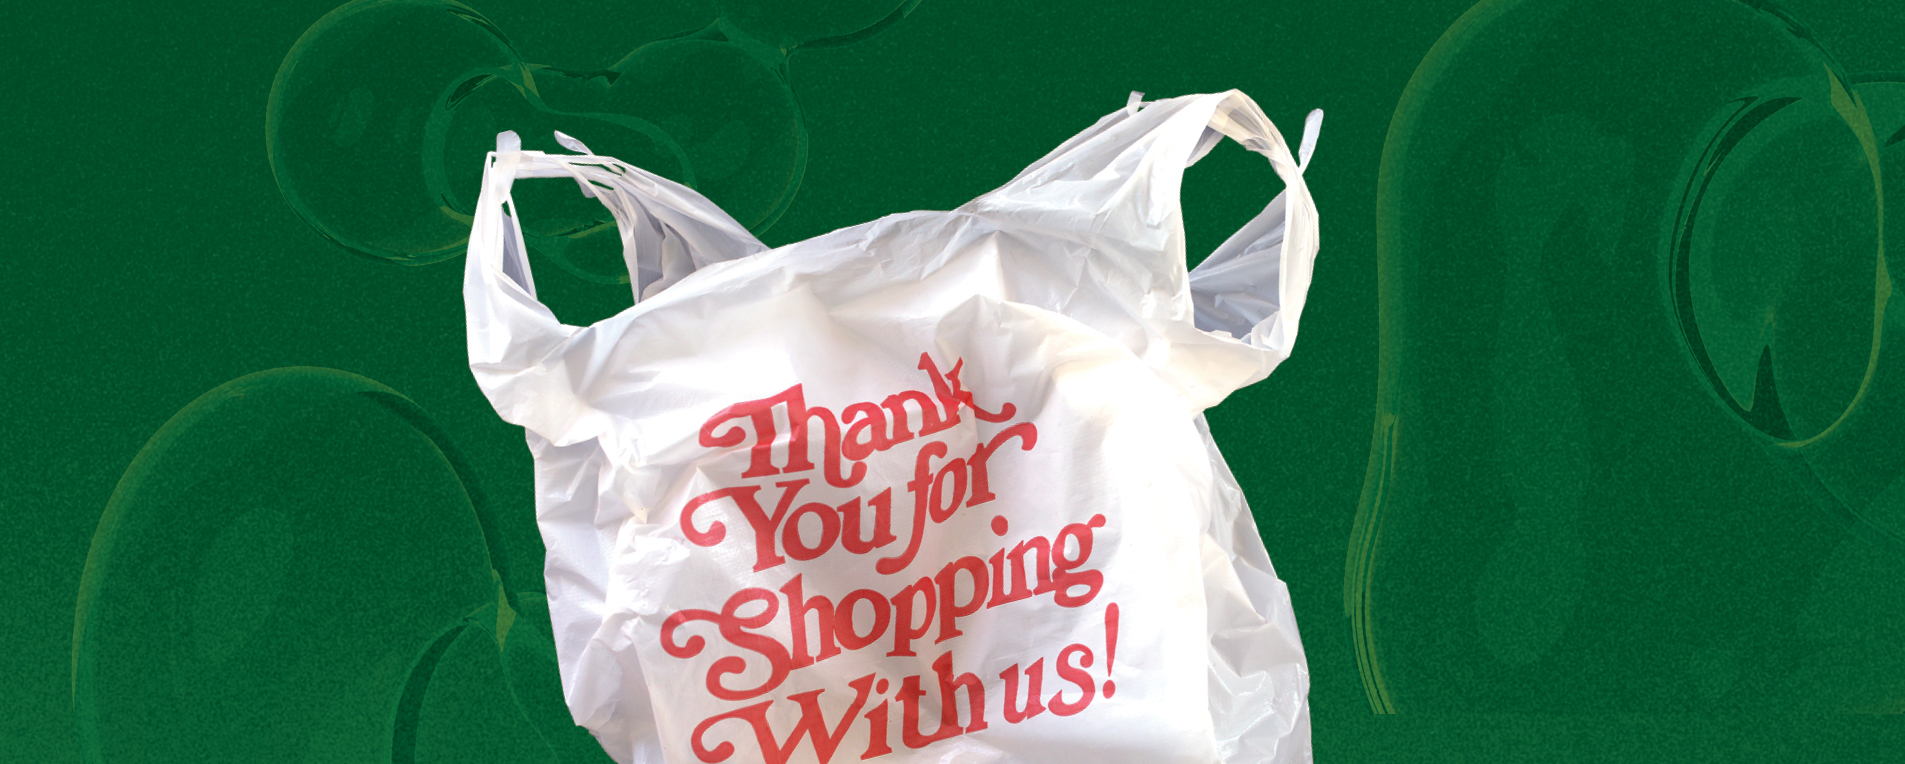 A shopping bag from a discount retailer